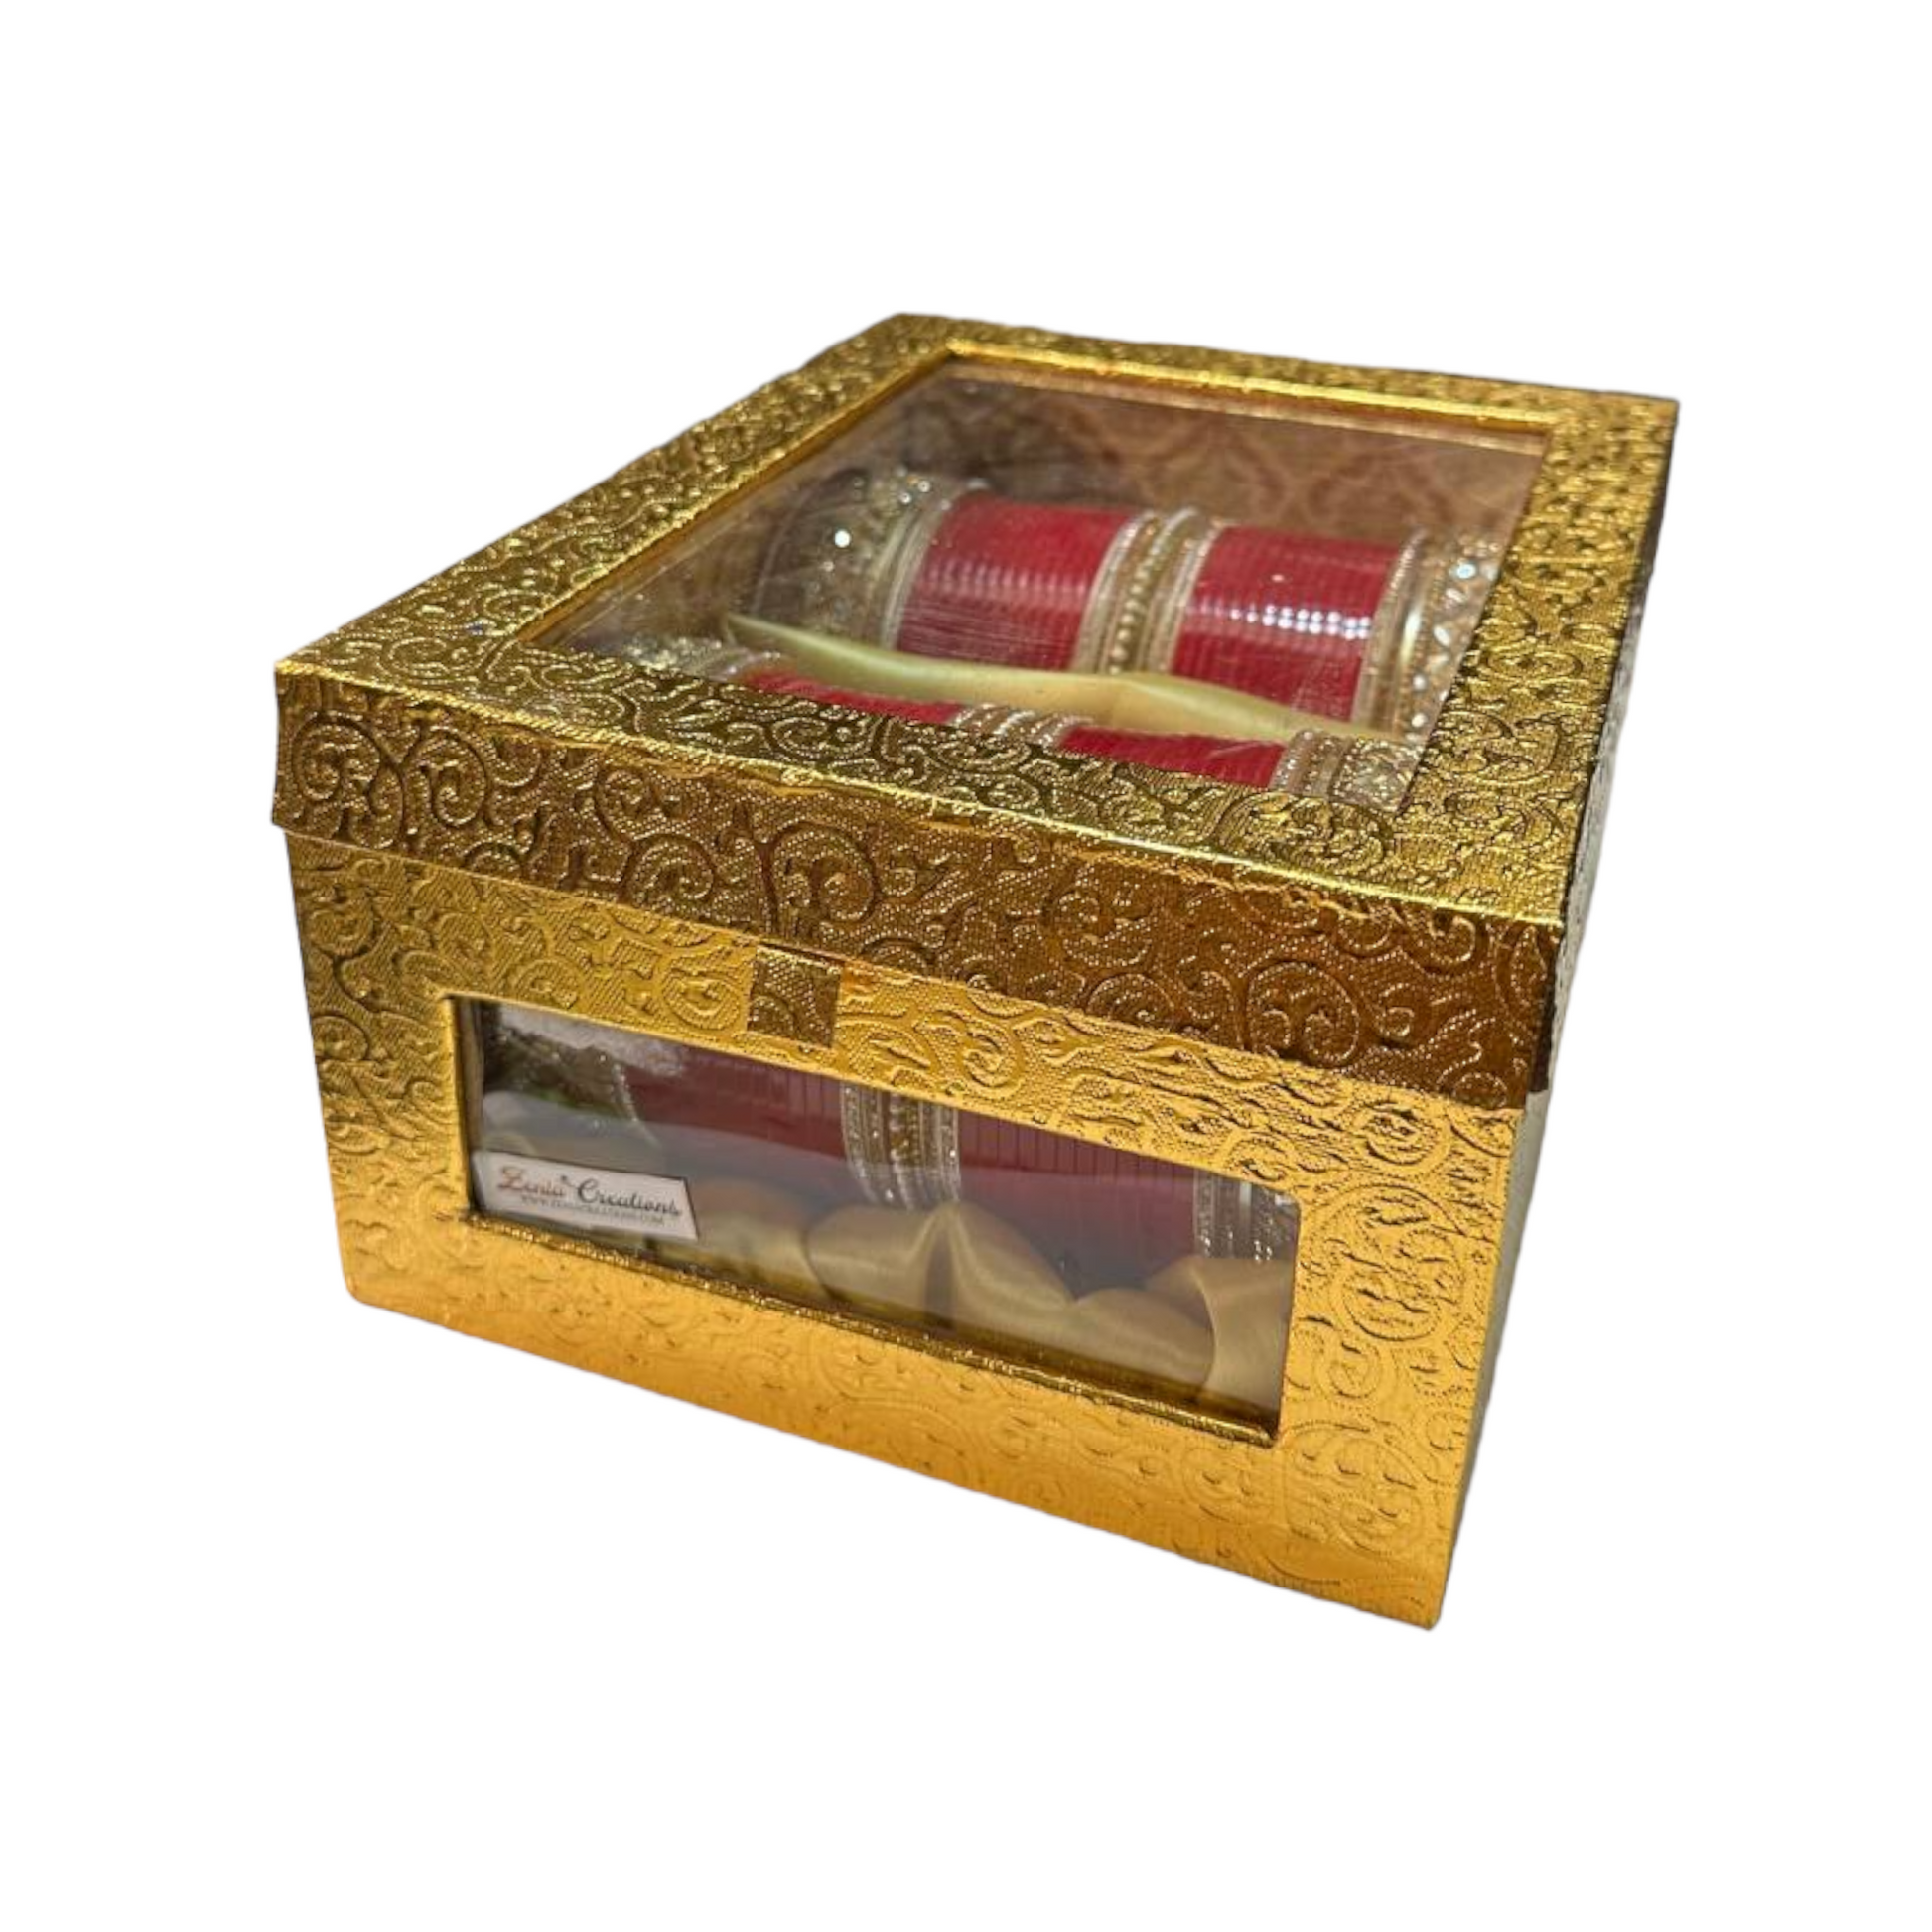 India Bridal Red Punjabi Chooda Plastic Bangles Set With Gift Box #HM